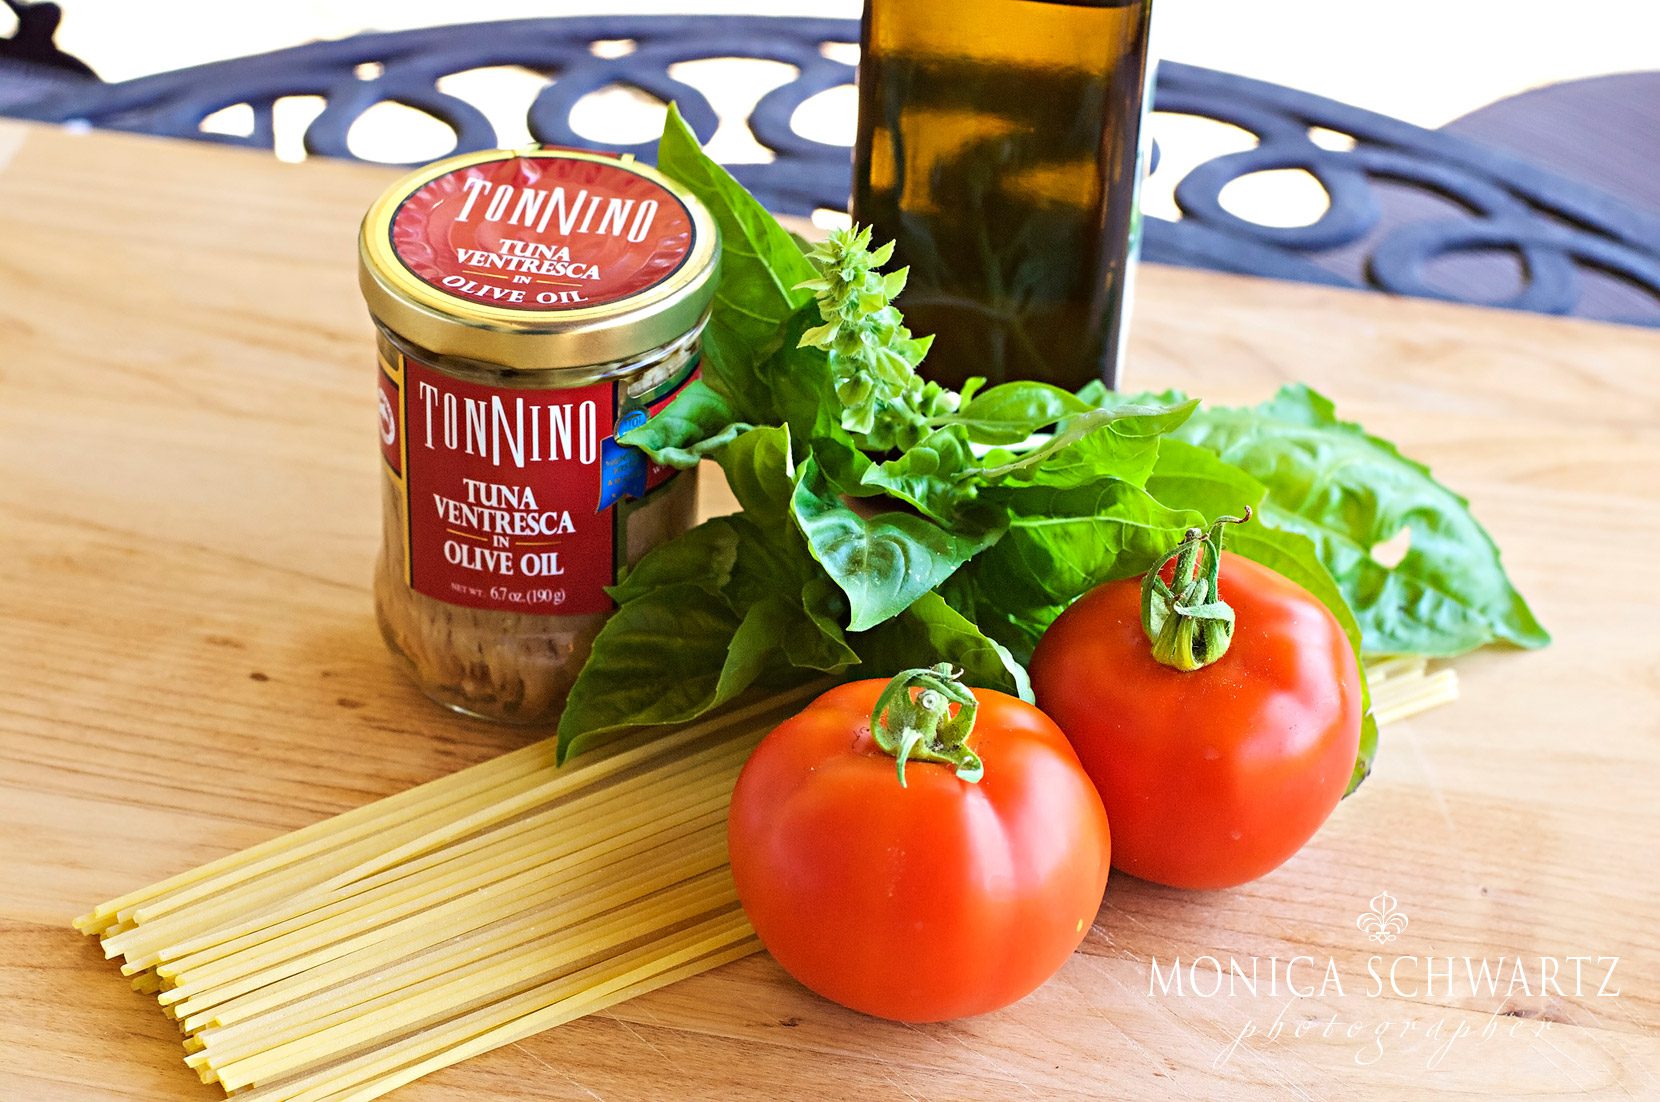 Tomatoes-basil-spaghetti-tuna-olive-oil-to-make-cold-pasta-salad